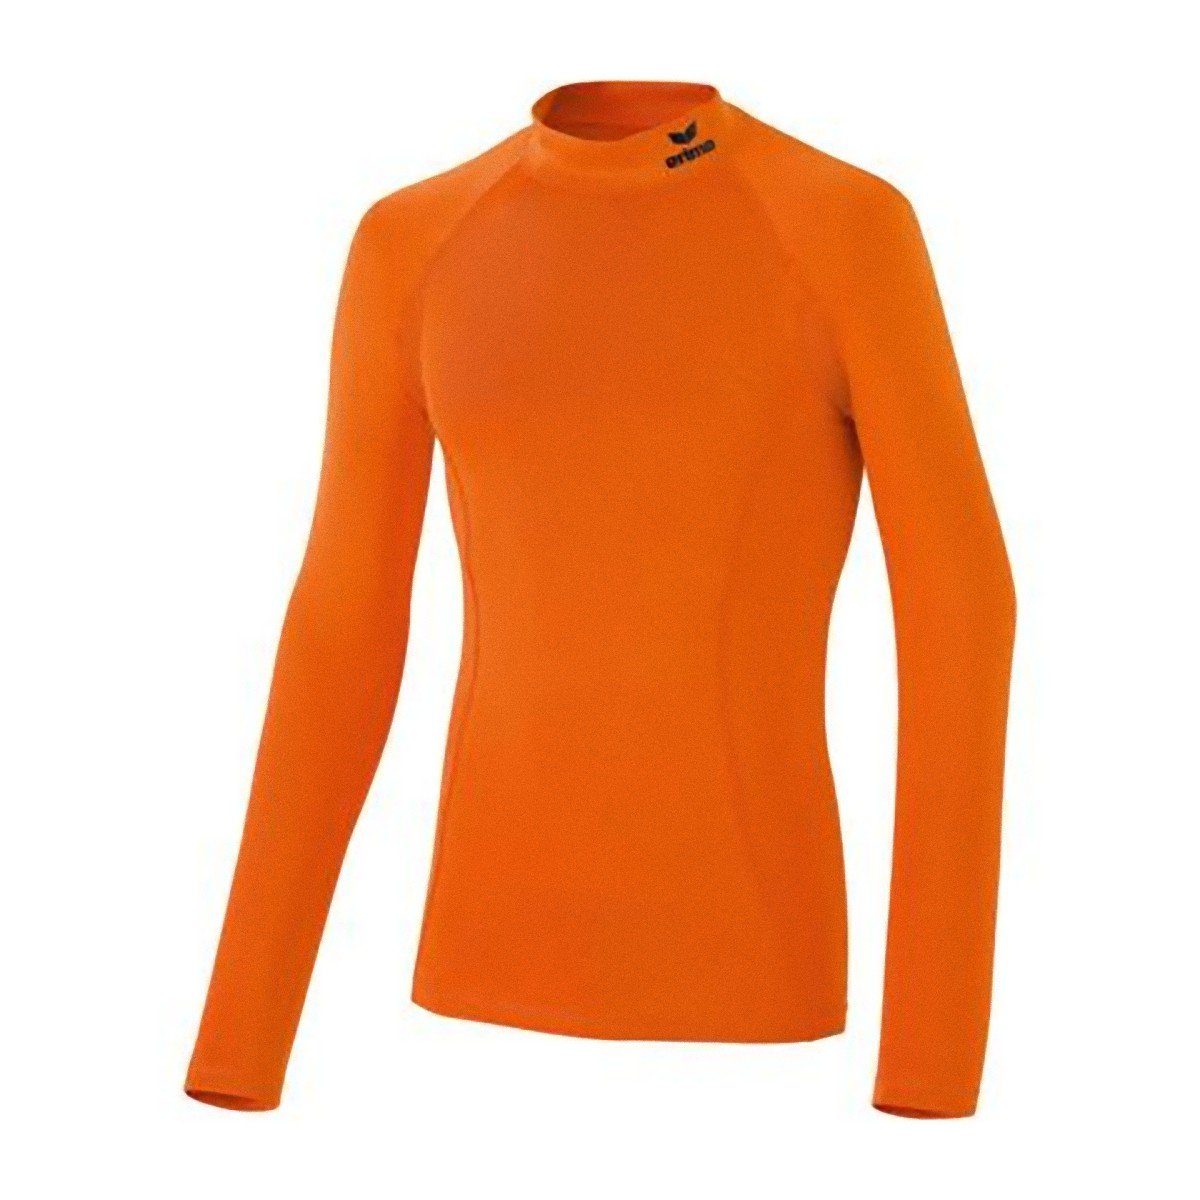 Erima Laufshirt Support Langarm Sportshirt Fussball Funktionsshirt Shirt Longsleeve Pullover Orange